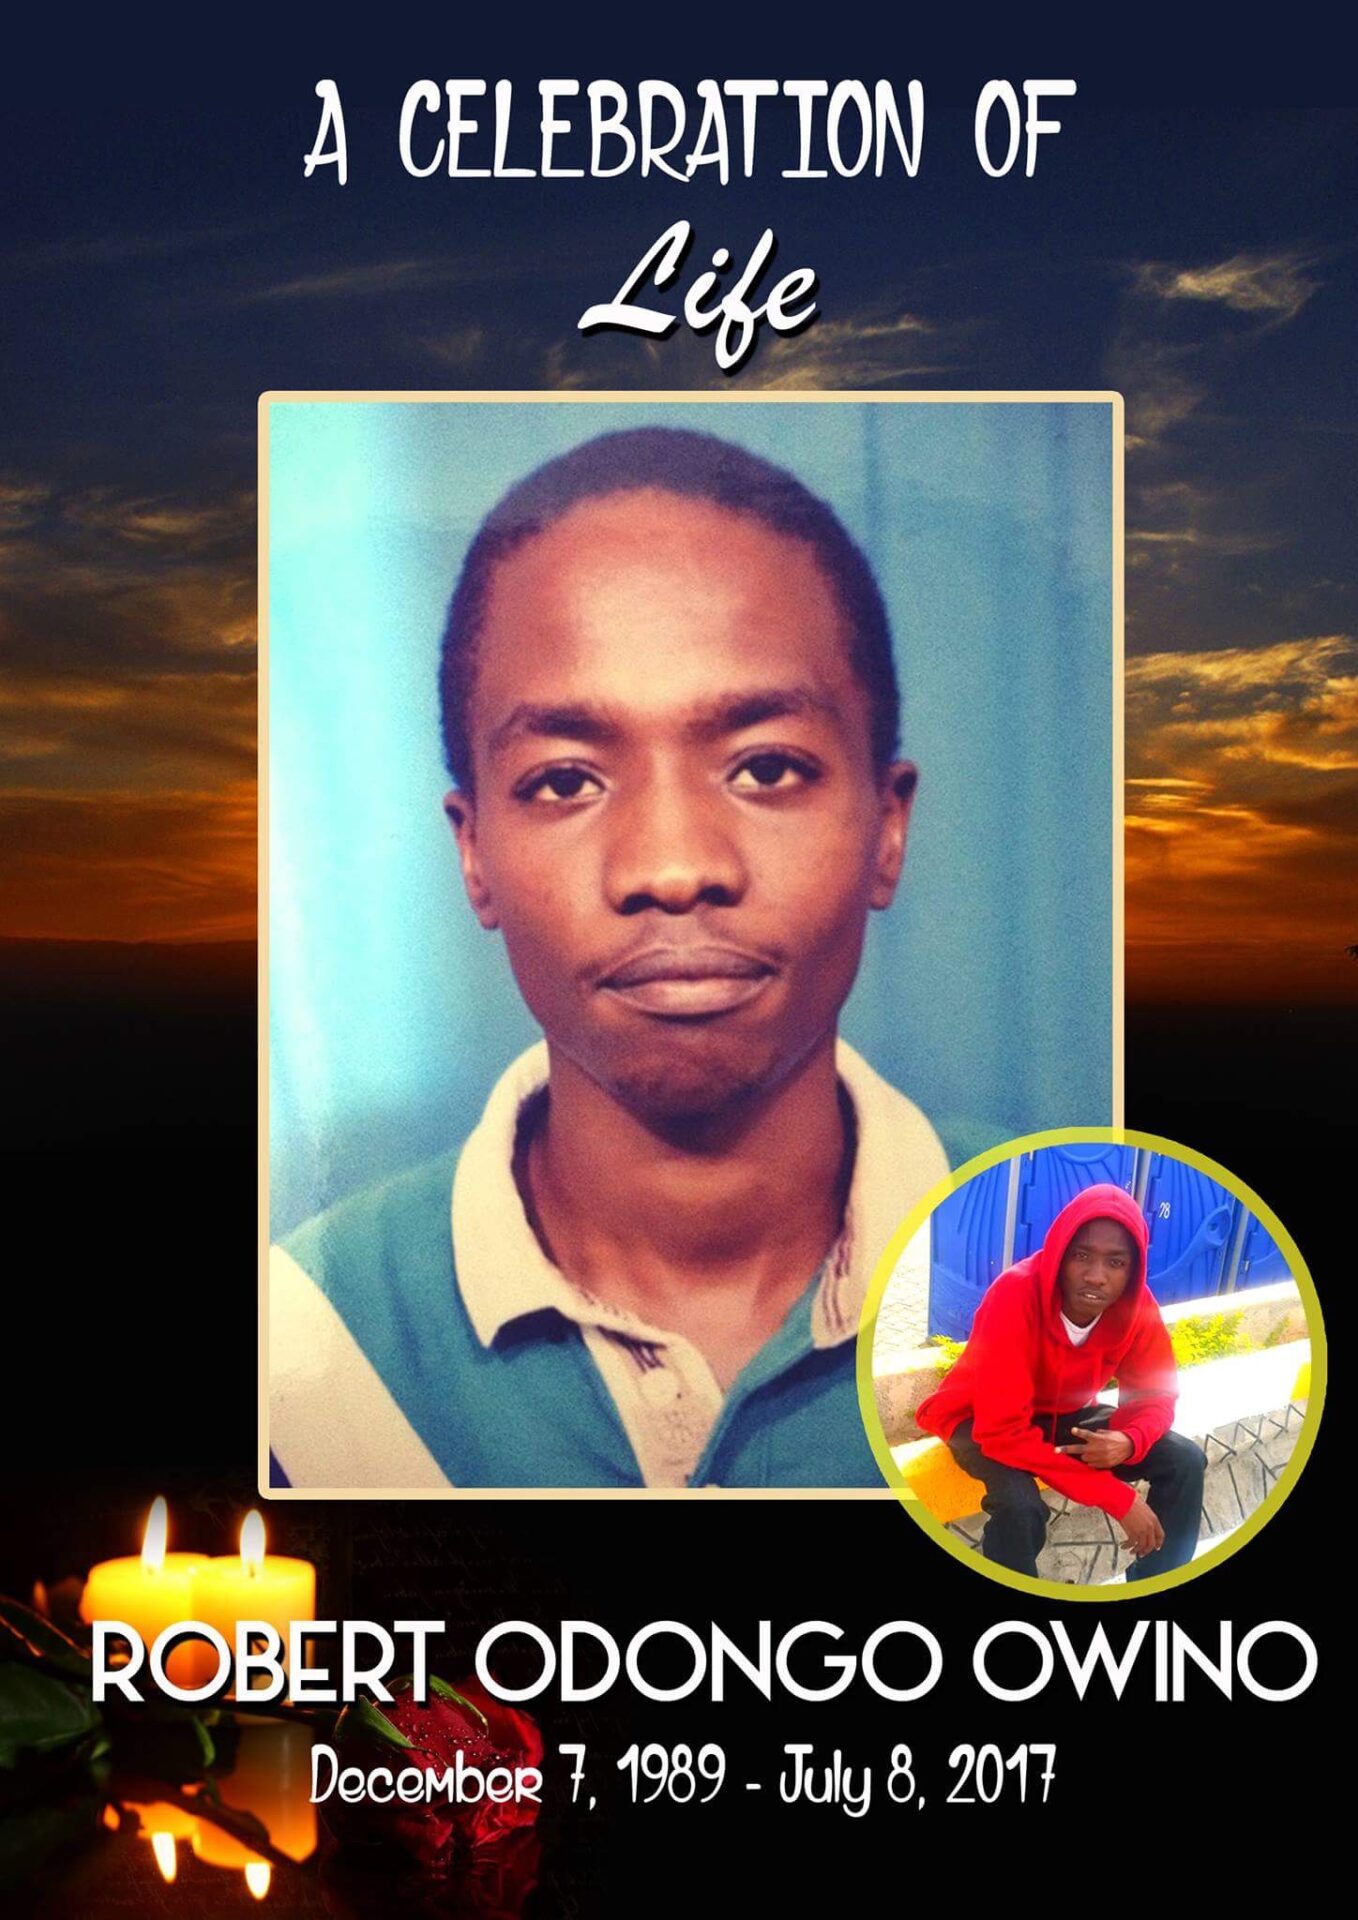 Obituary Image of Robert Odongo Owino